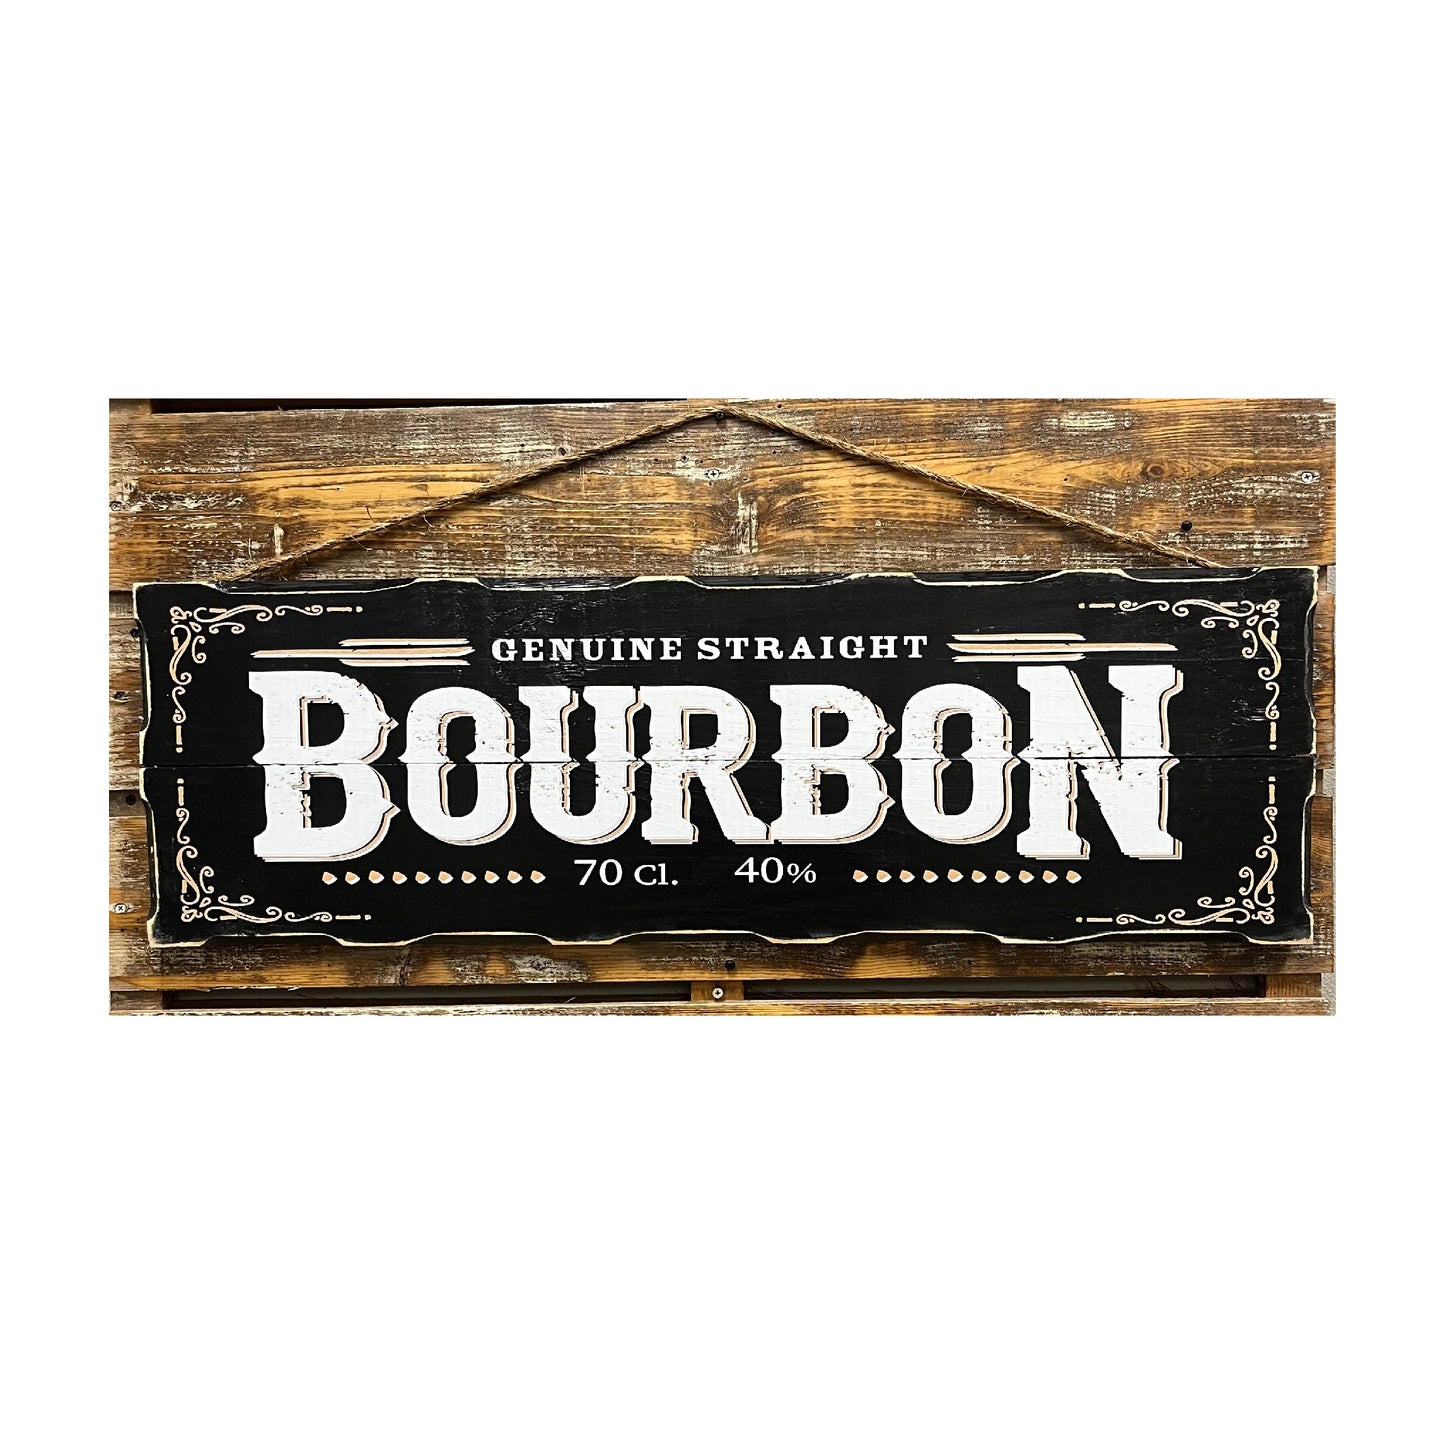 Genuine Straight Bourbon